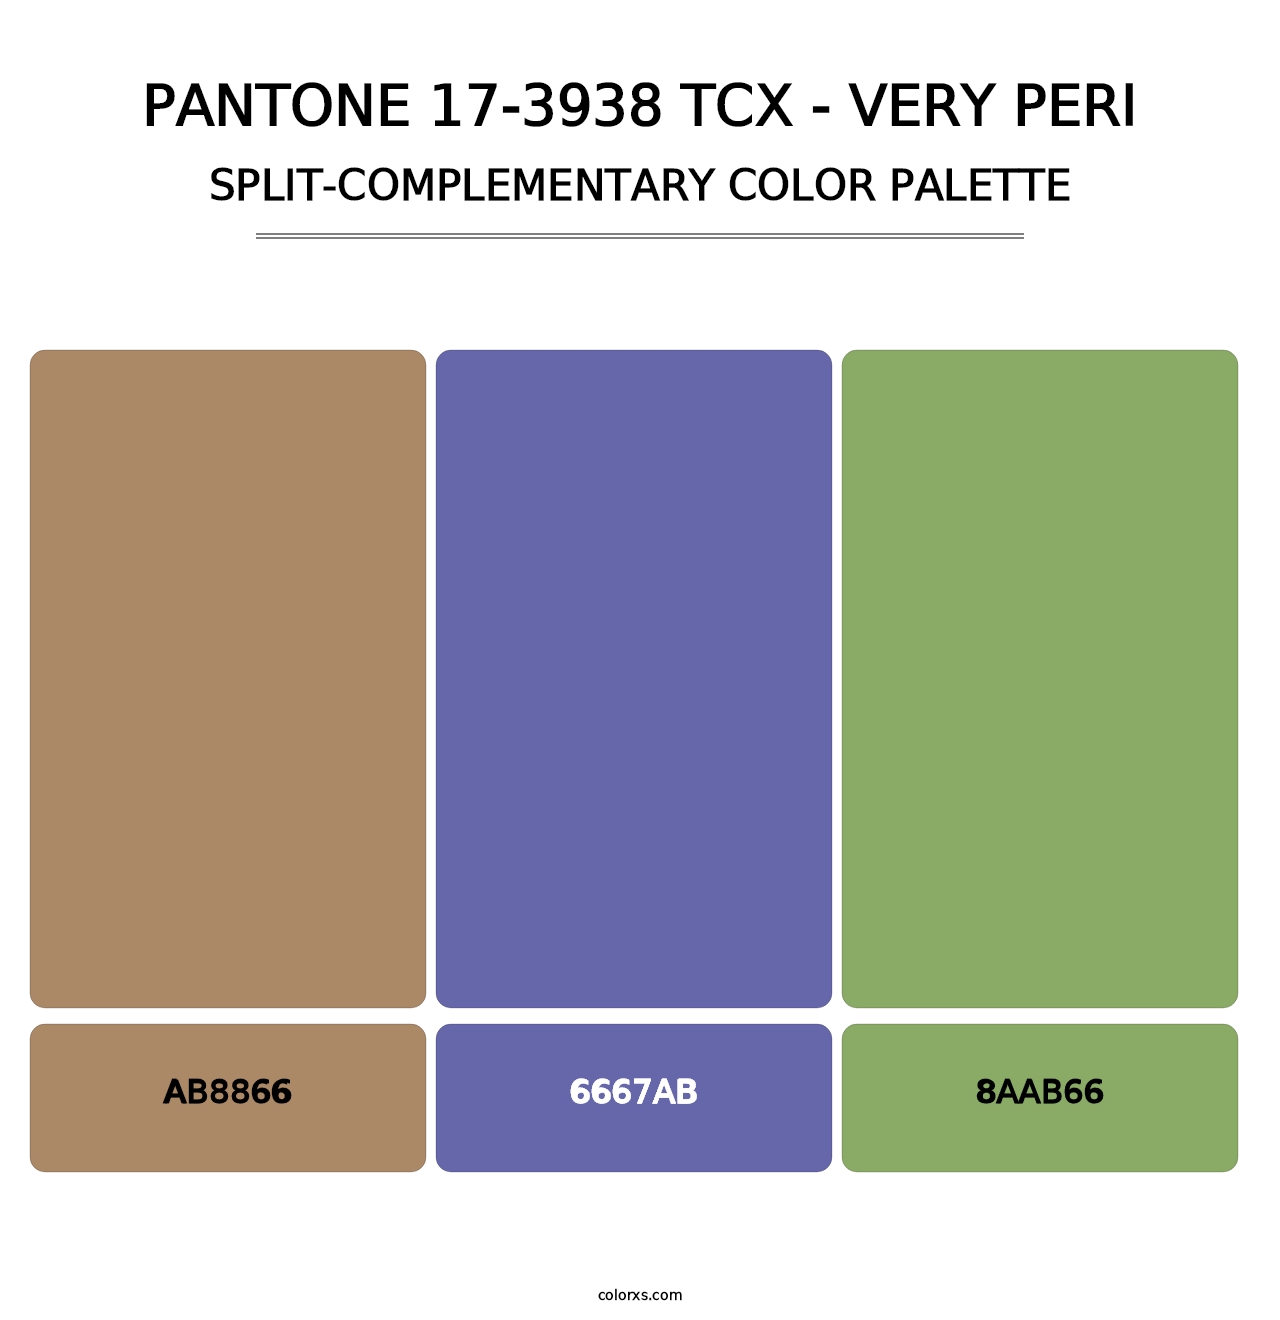 PANTONE 17-3938 TCX - Very Peri - Split-Complementary Color Palette